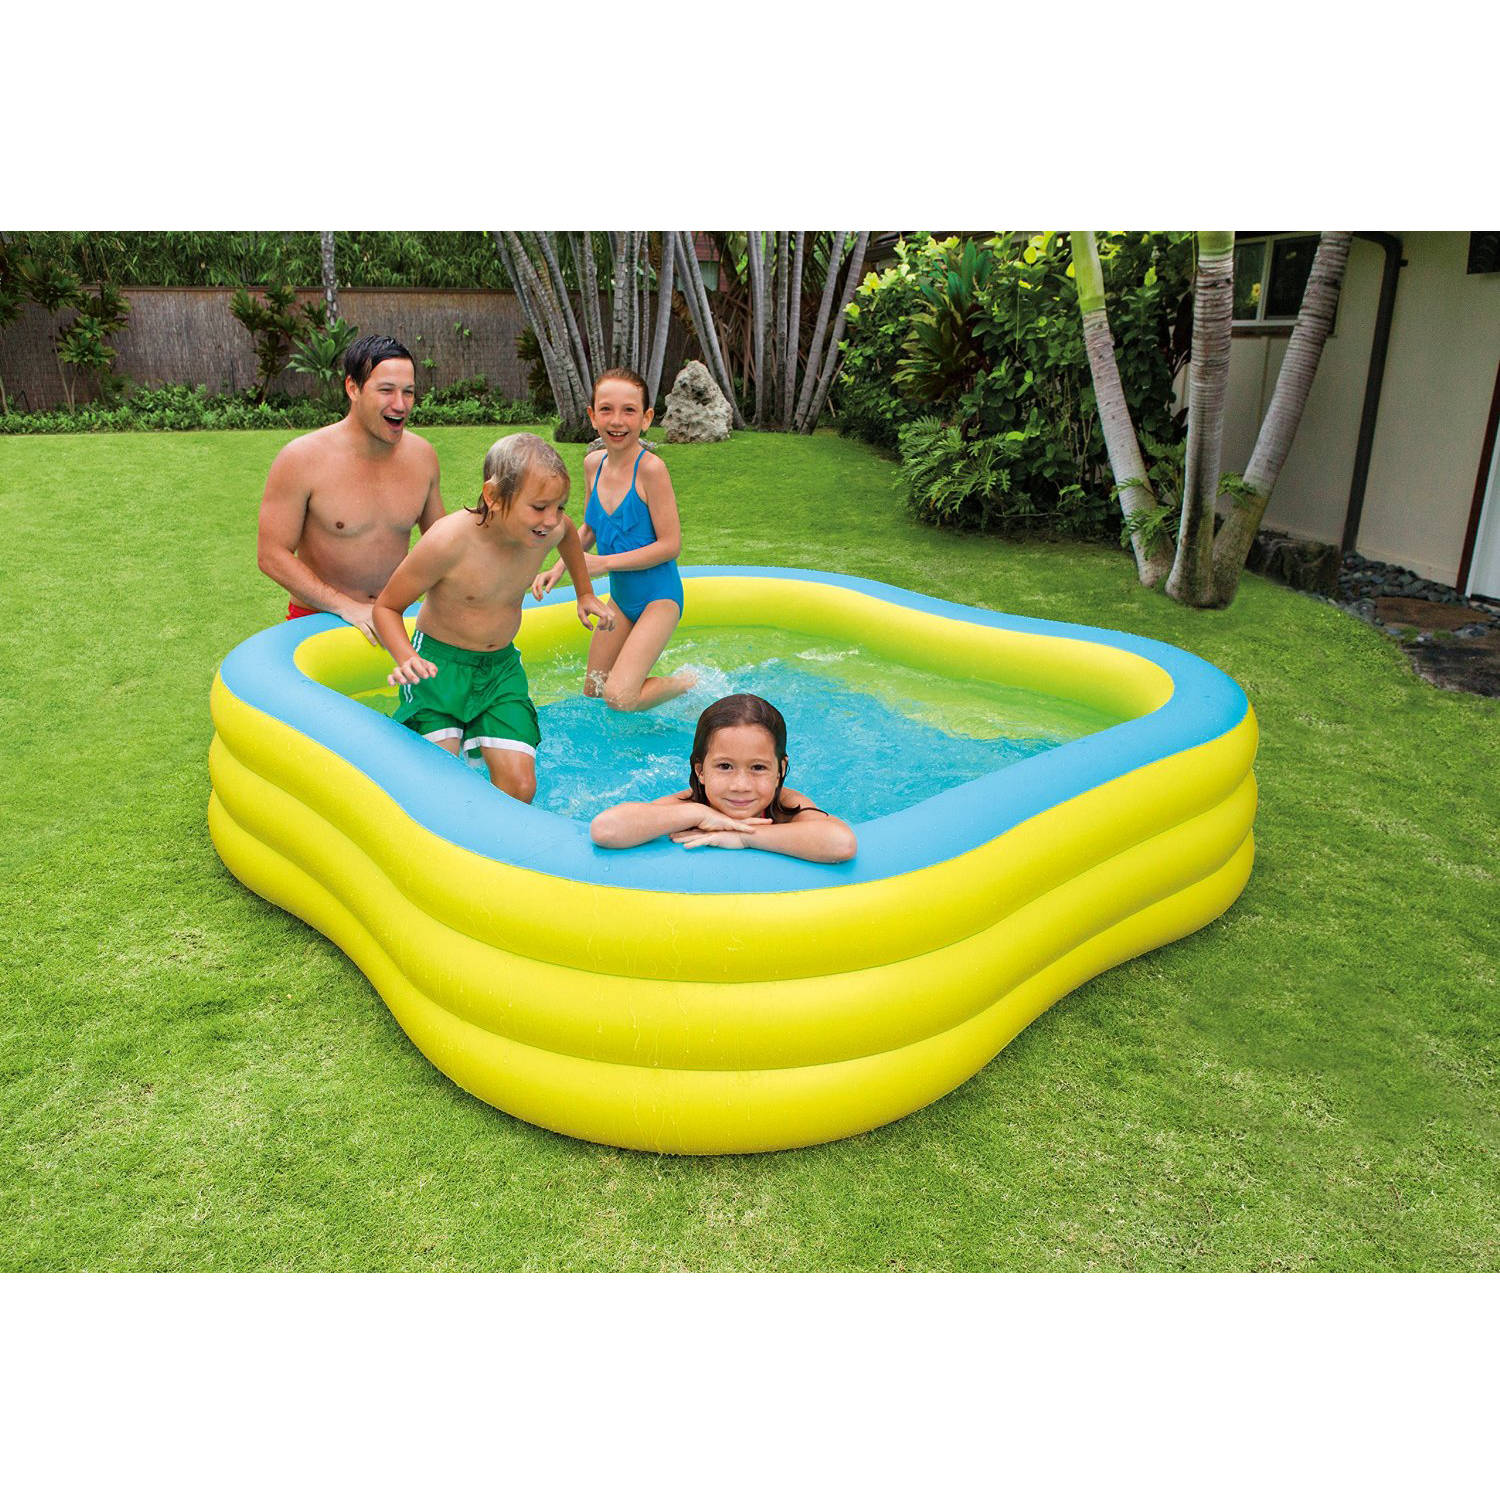 Intex Inflatable Beach Wave Swim Center Family Pool, 90" x 90" x 22" - image 1 of 3